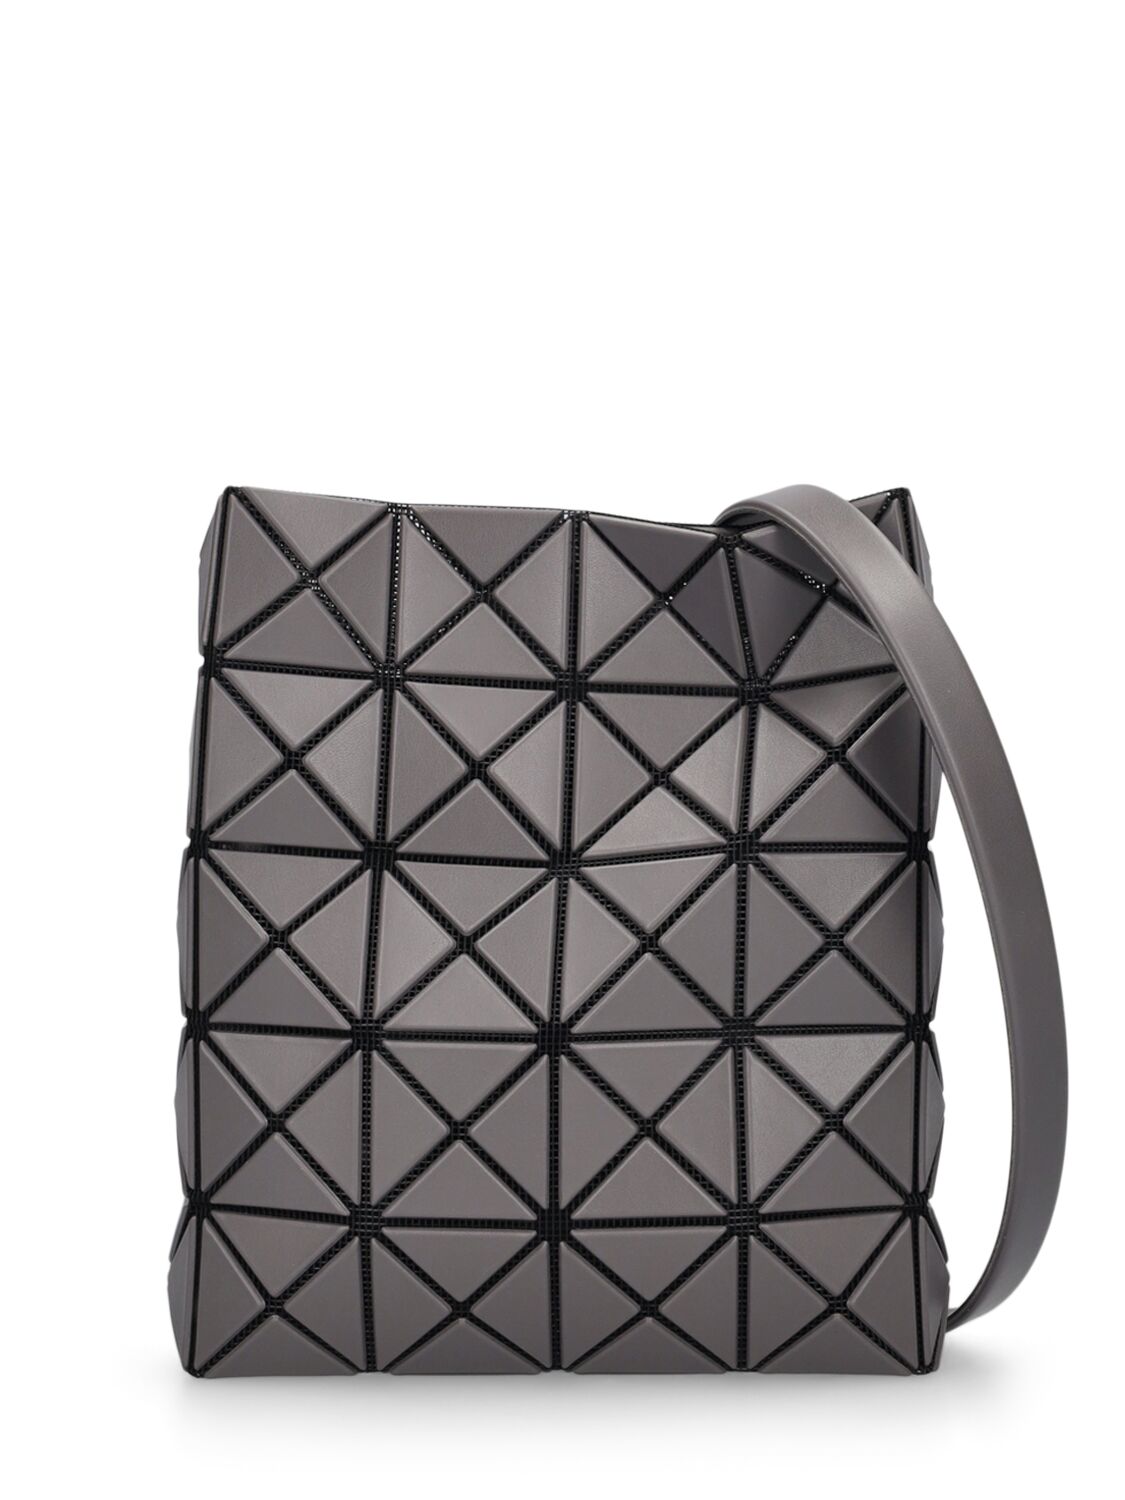 Bao Bao Issey Miyake Women's Combination Prism Matte Crossbody Bag In Charcoal Grey